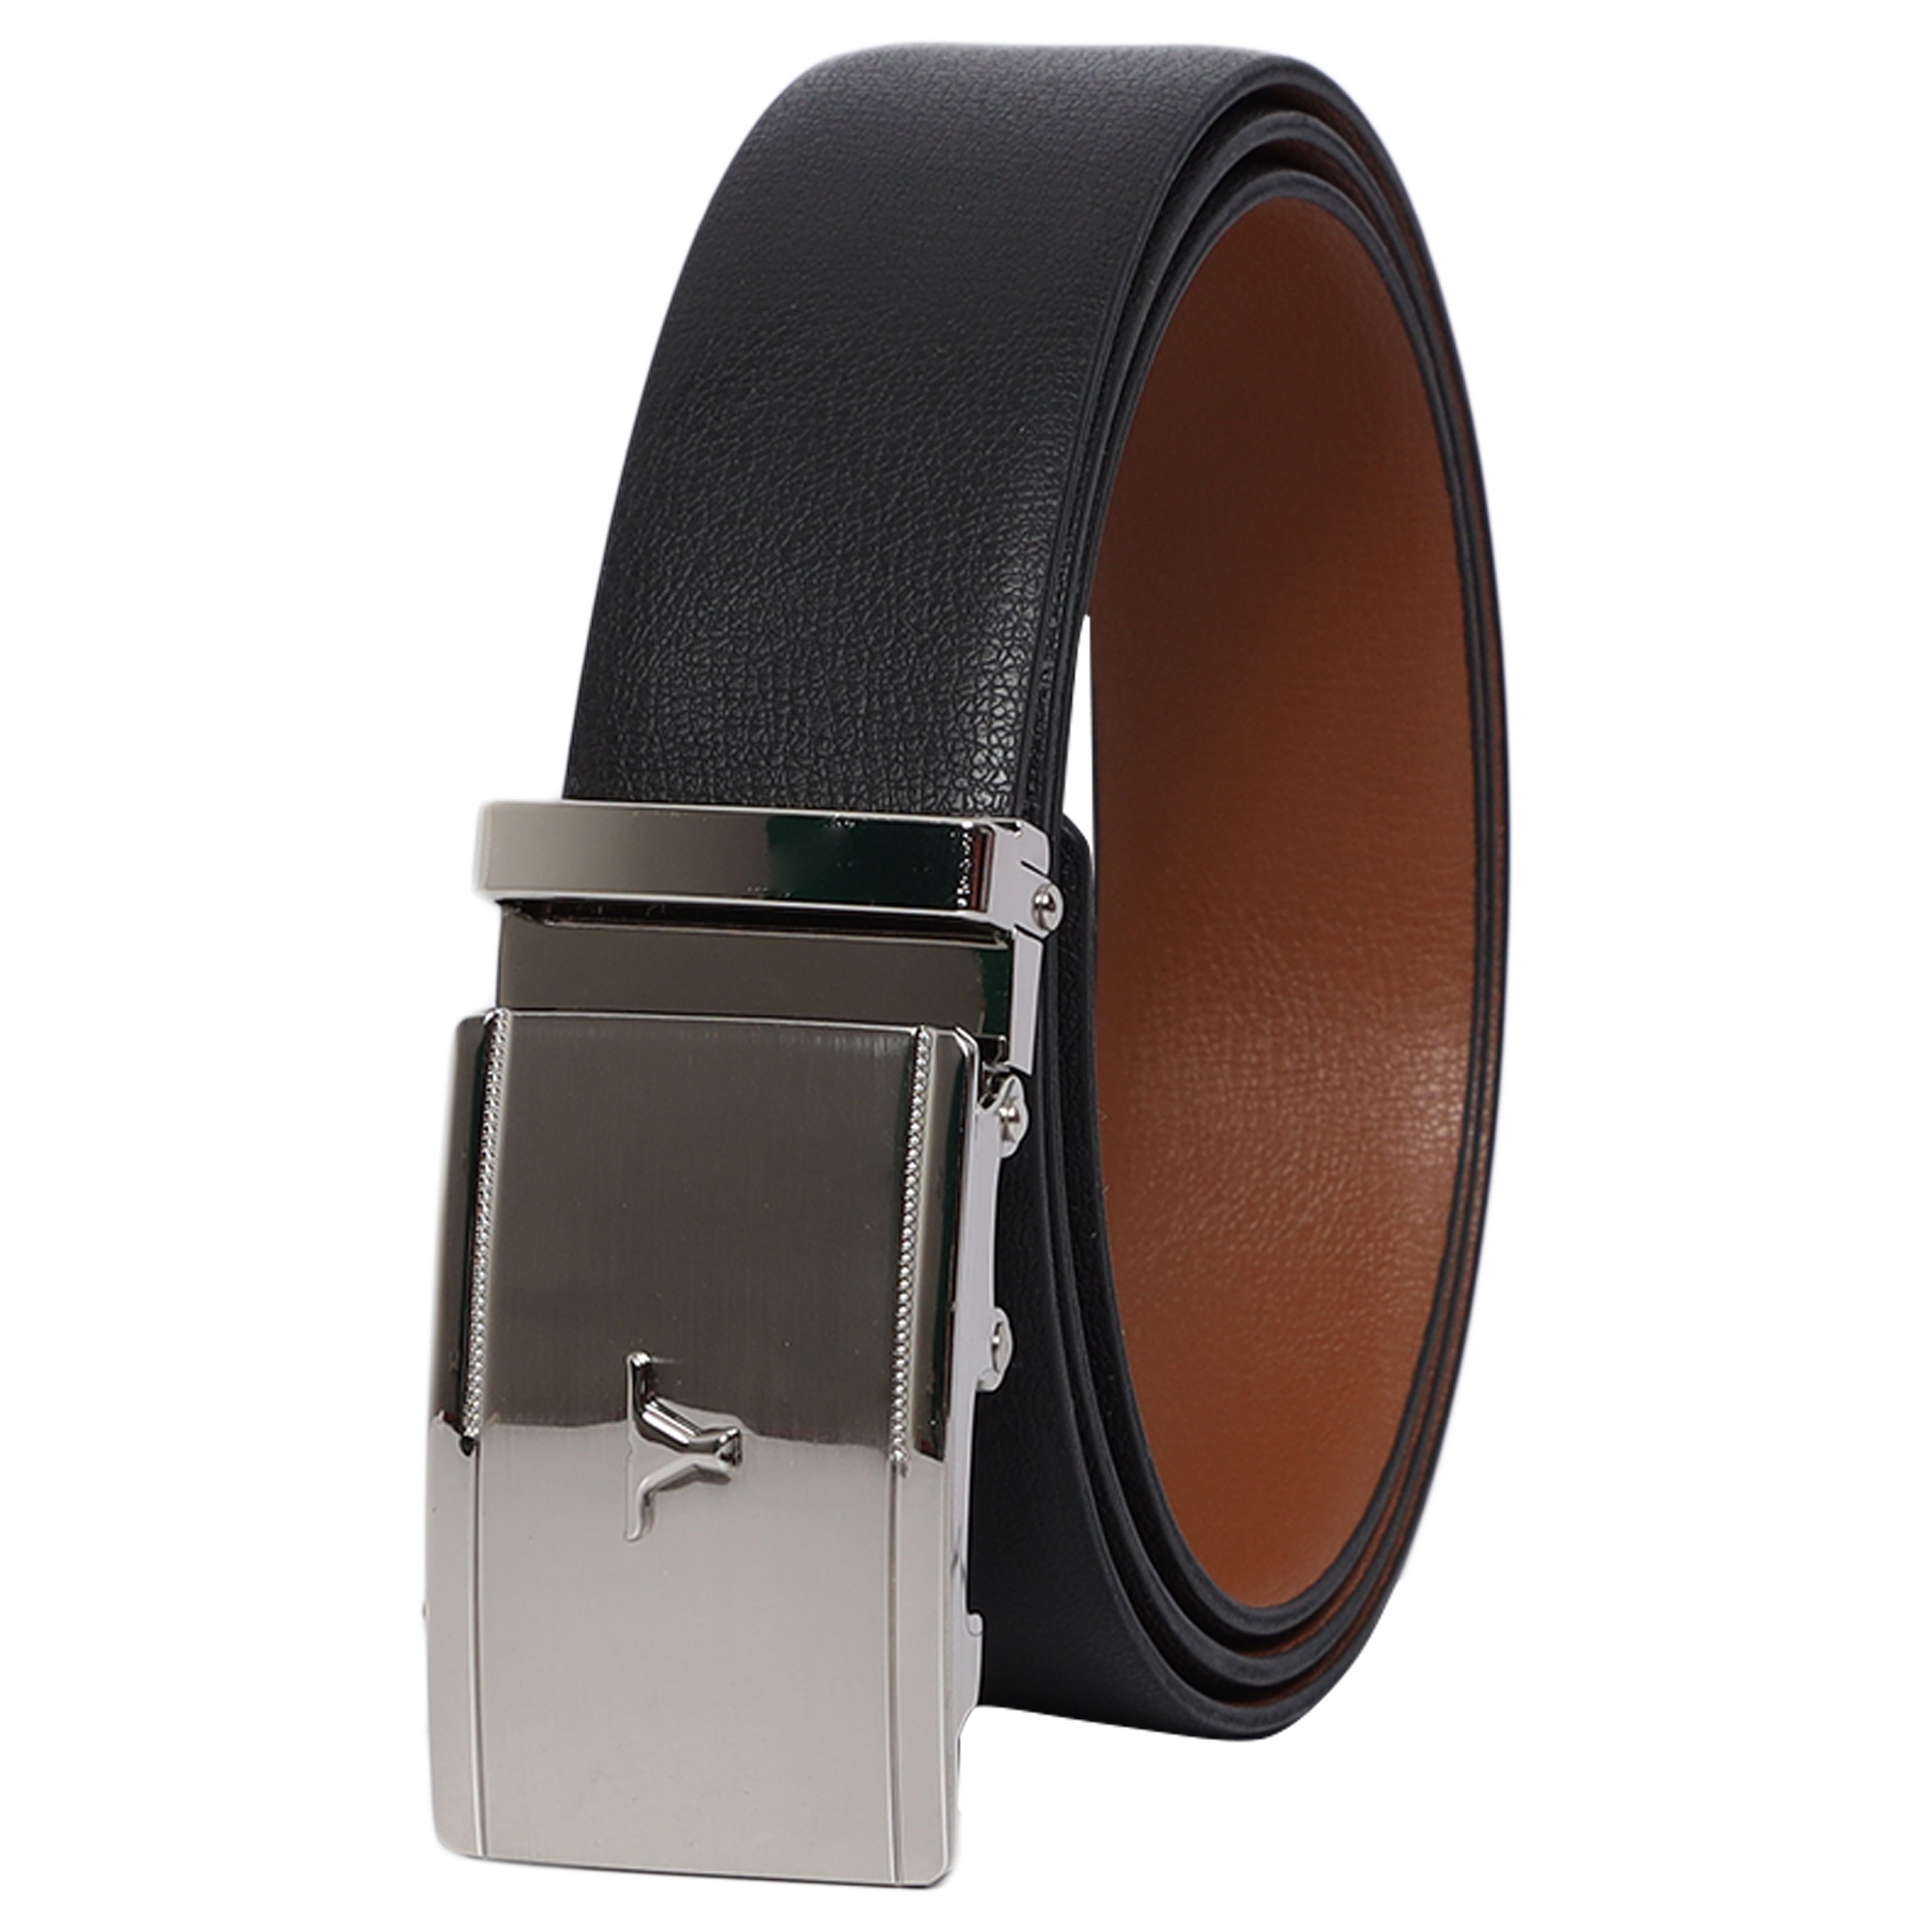 Bulchee Men's Genuine Leather Reversible Auto Lock Belt (Formal, Tan/Black) BUL2223B